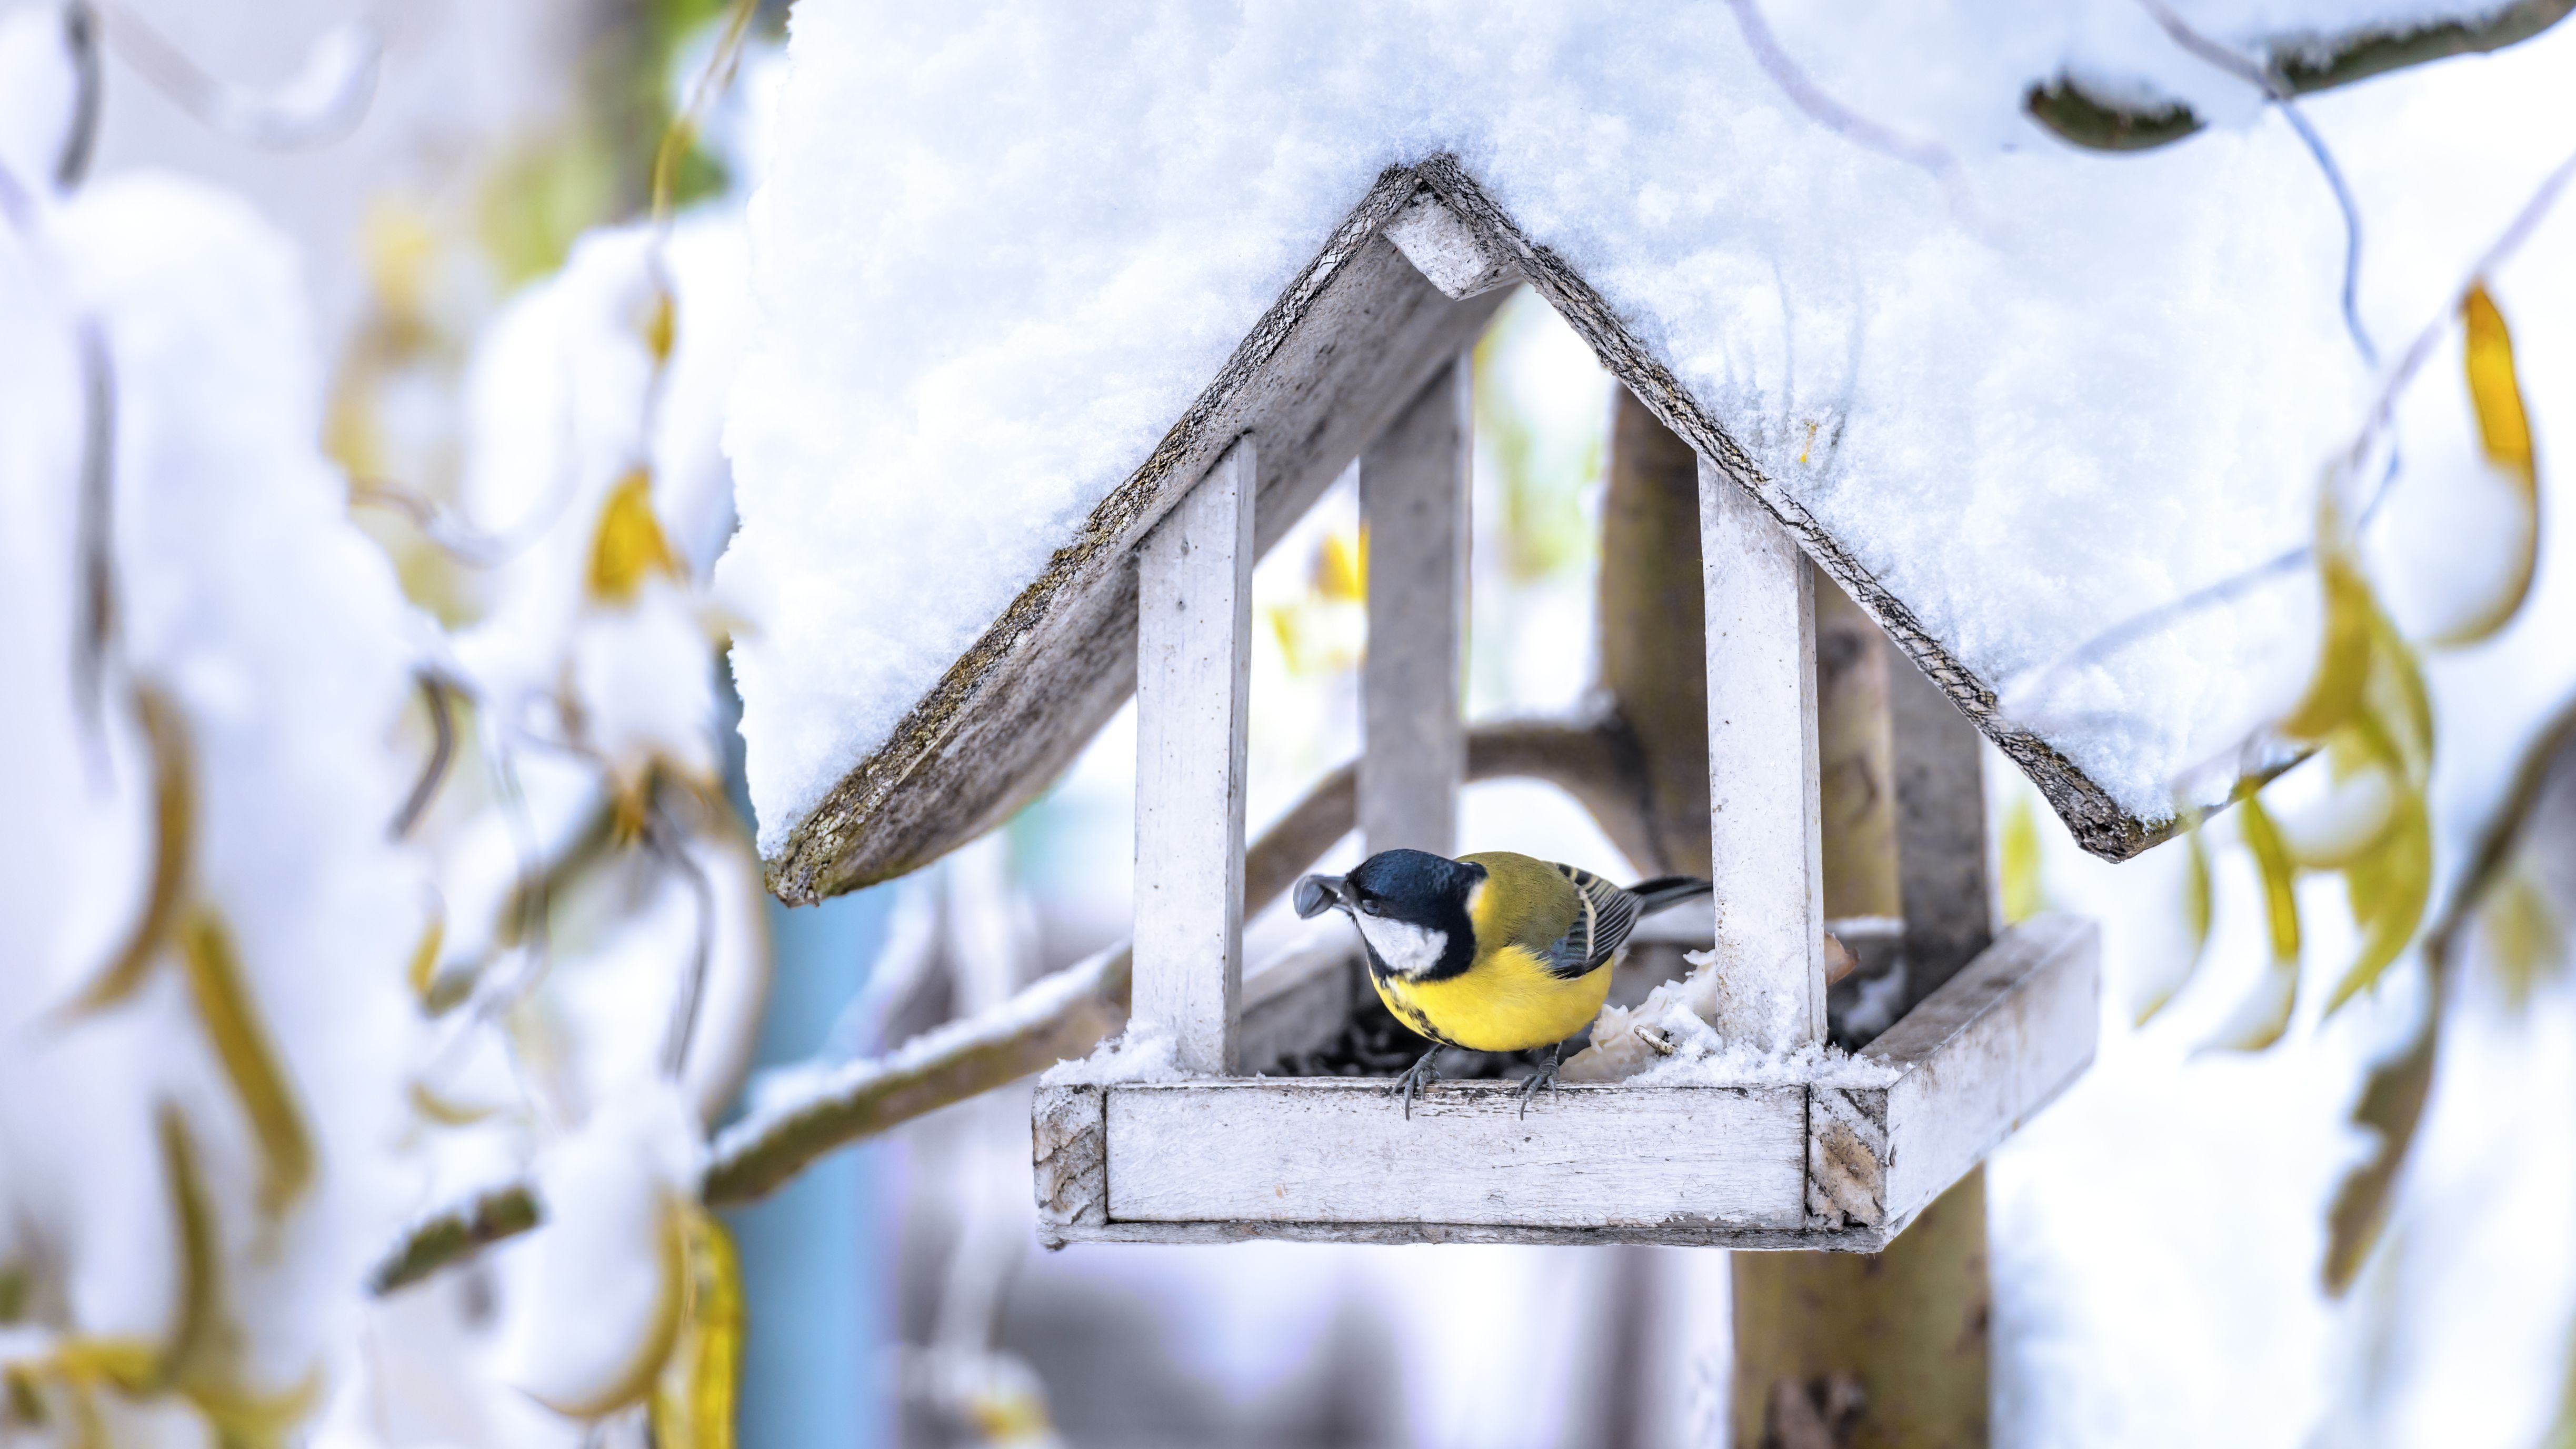 Vögel füttern im Winter: So geht's